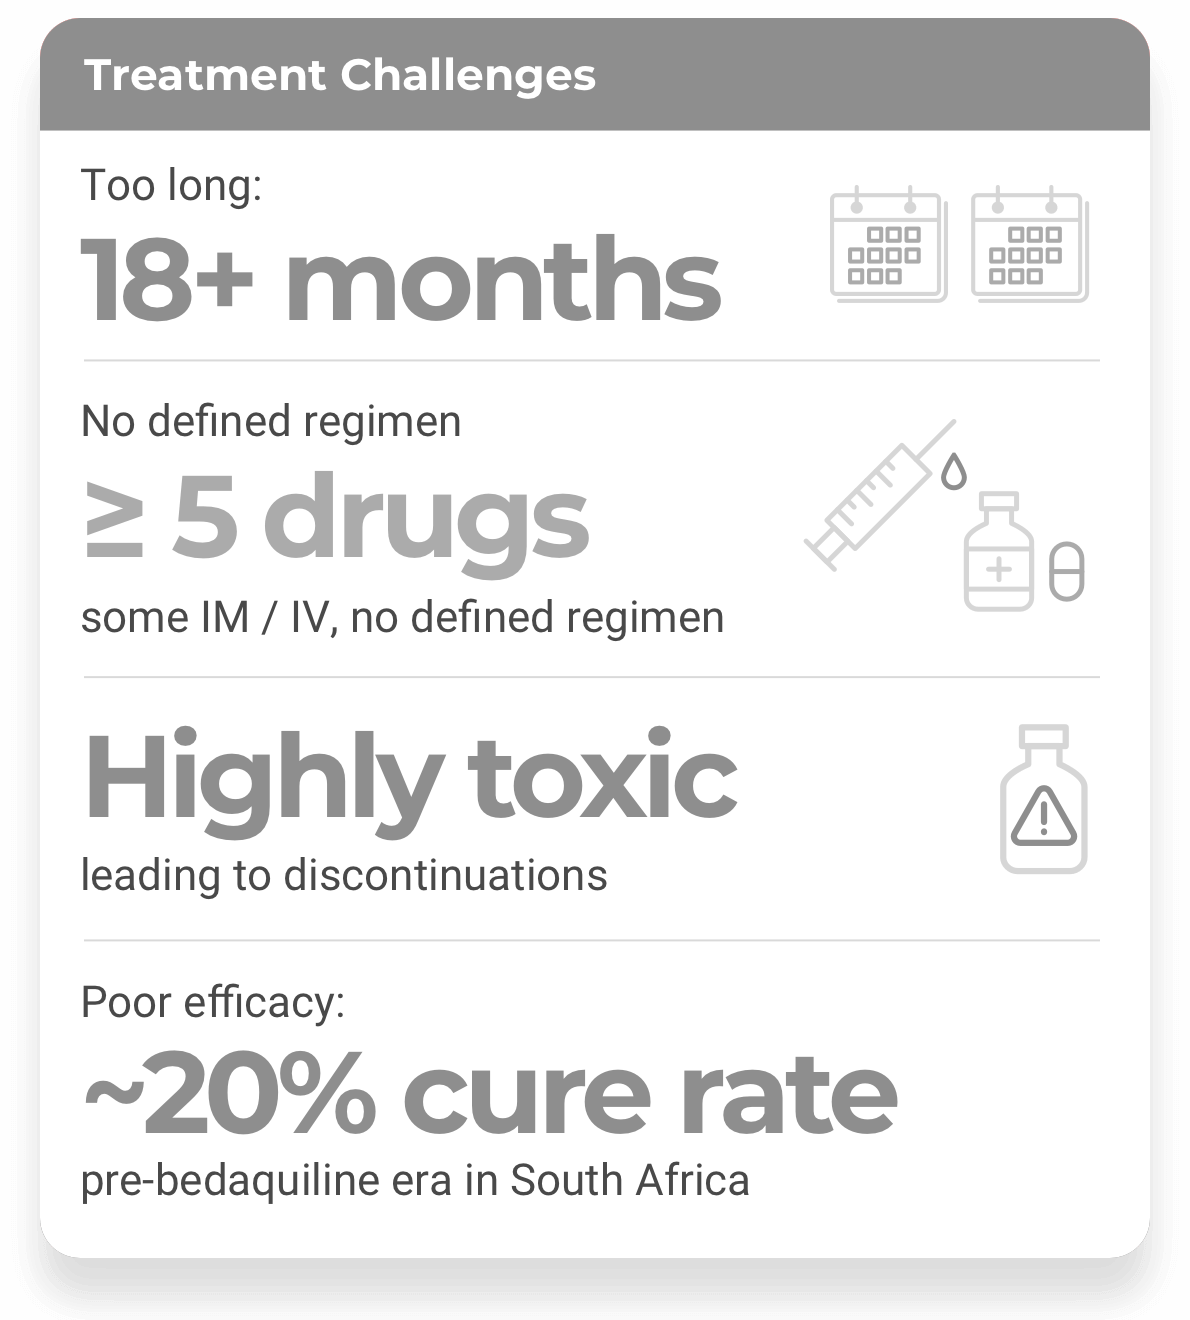 Treatment challenges